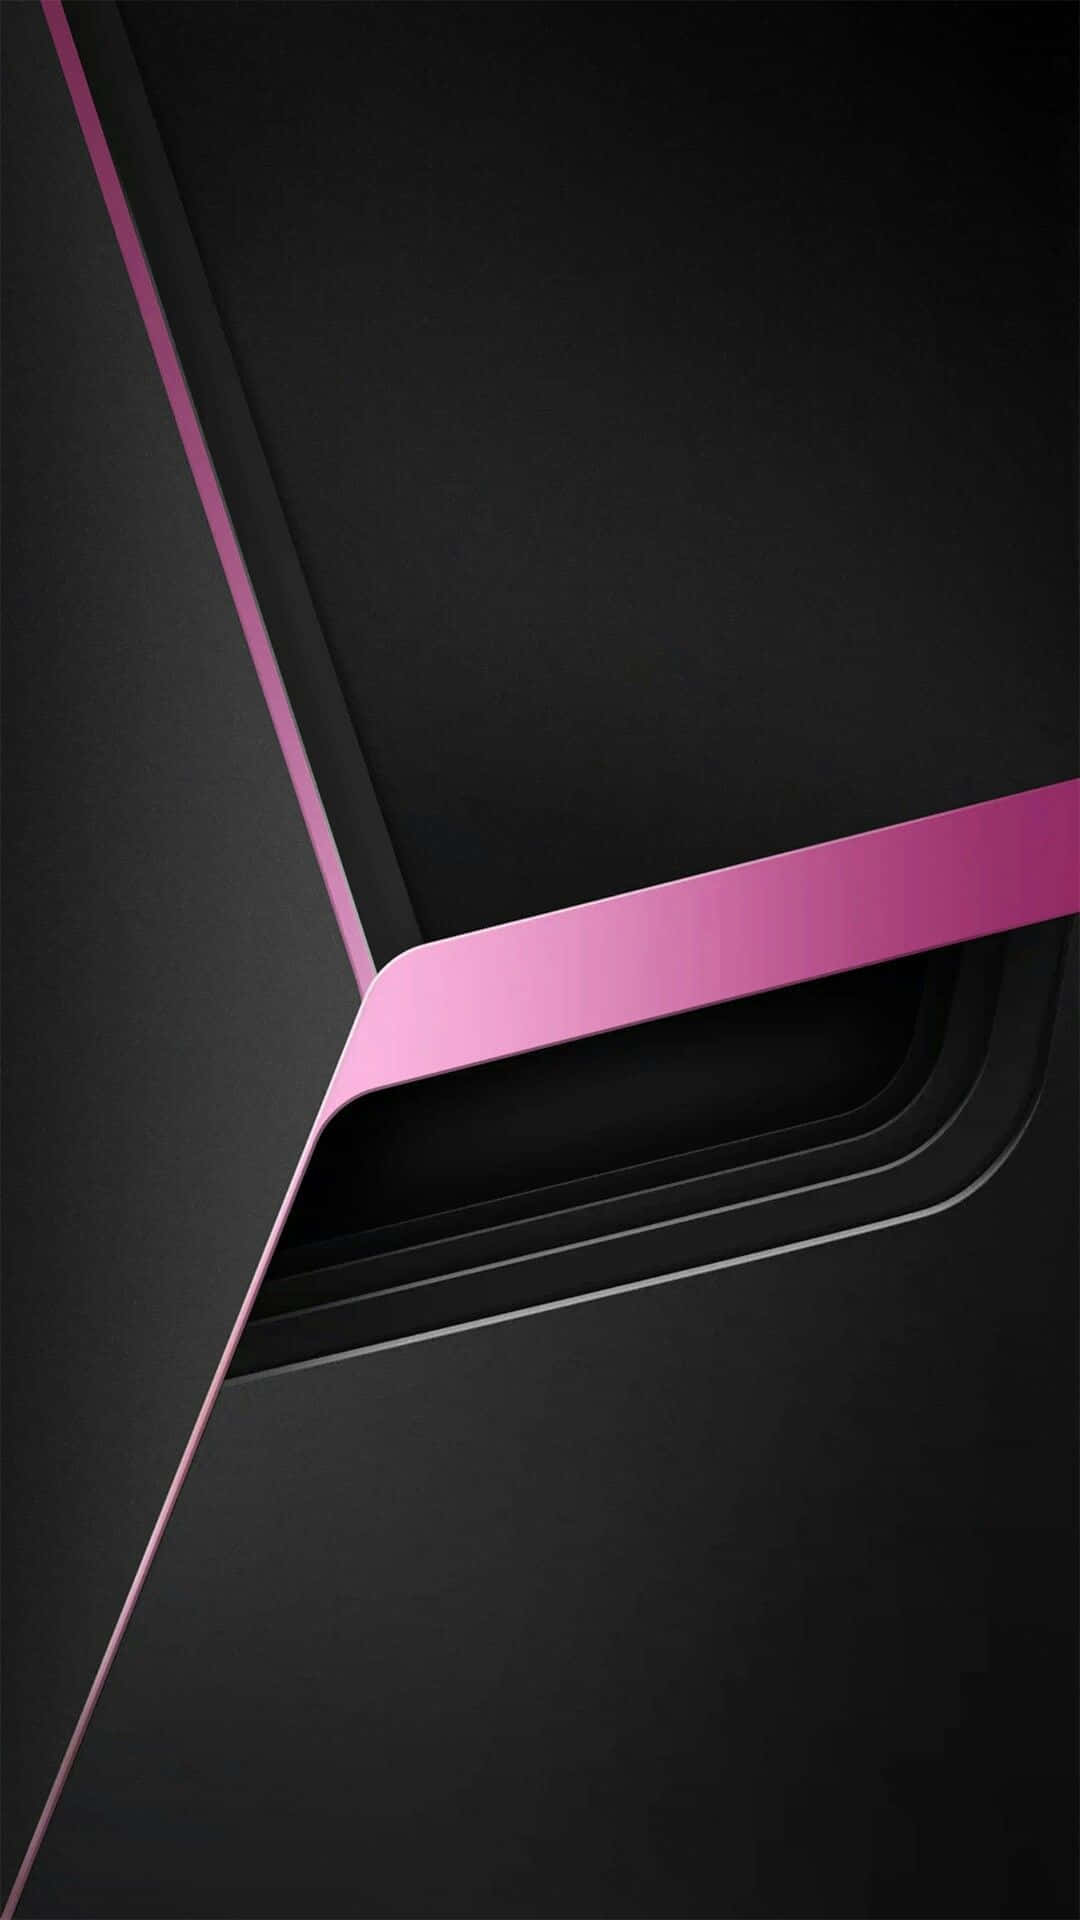 Stunning Black and Pink iPhone Wallpaper Wallpaper